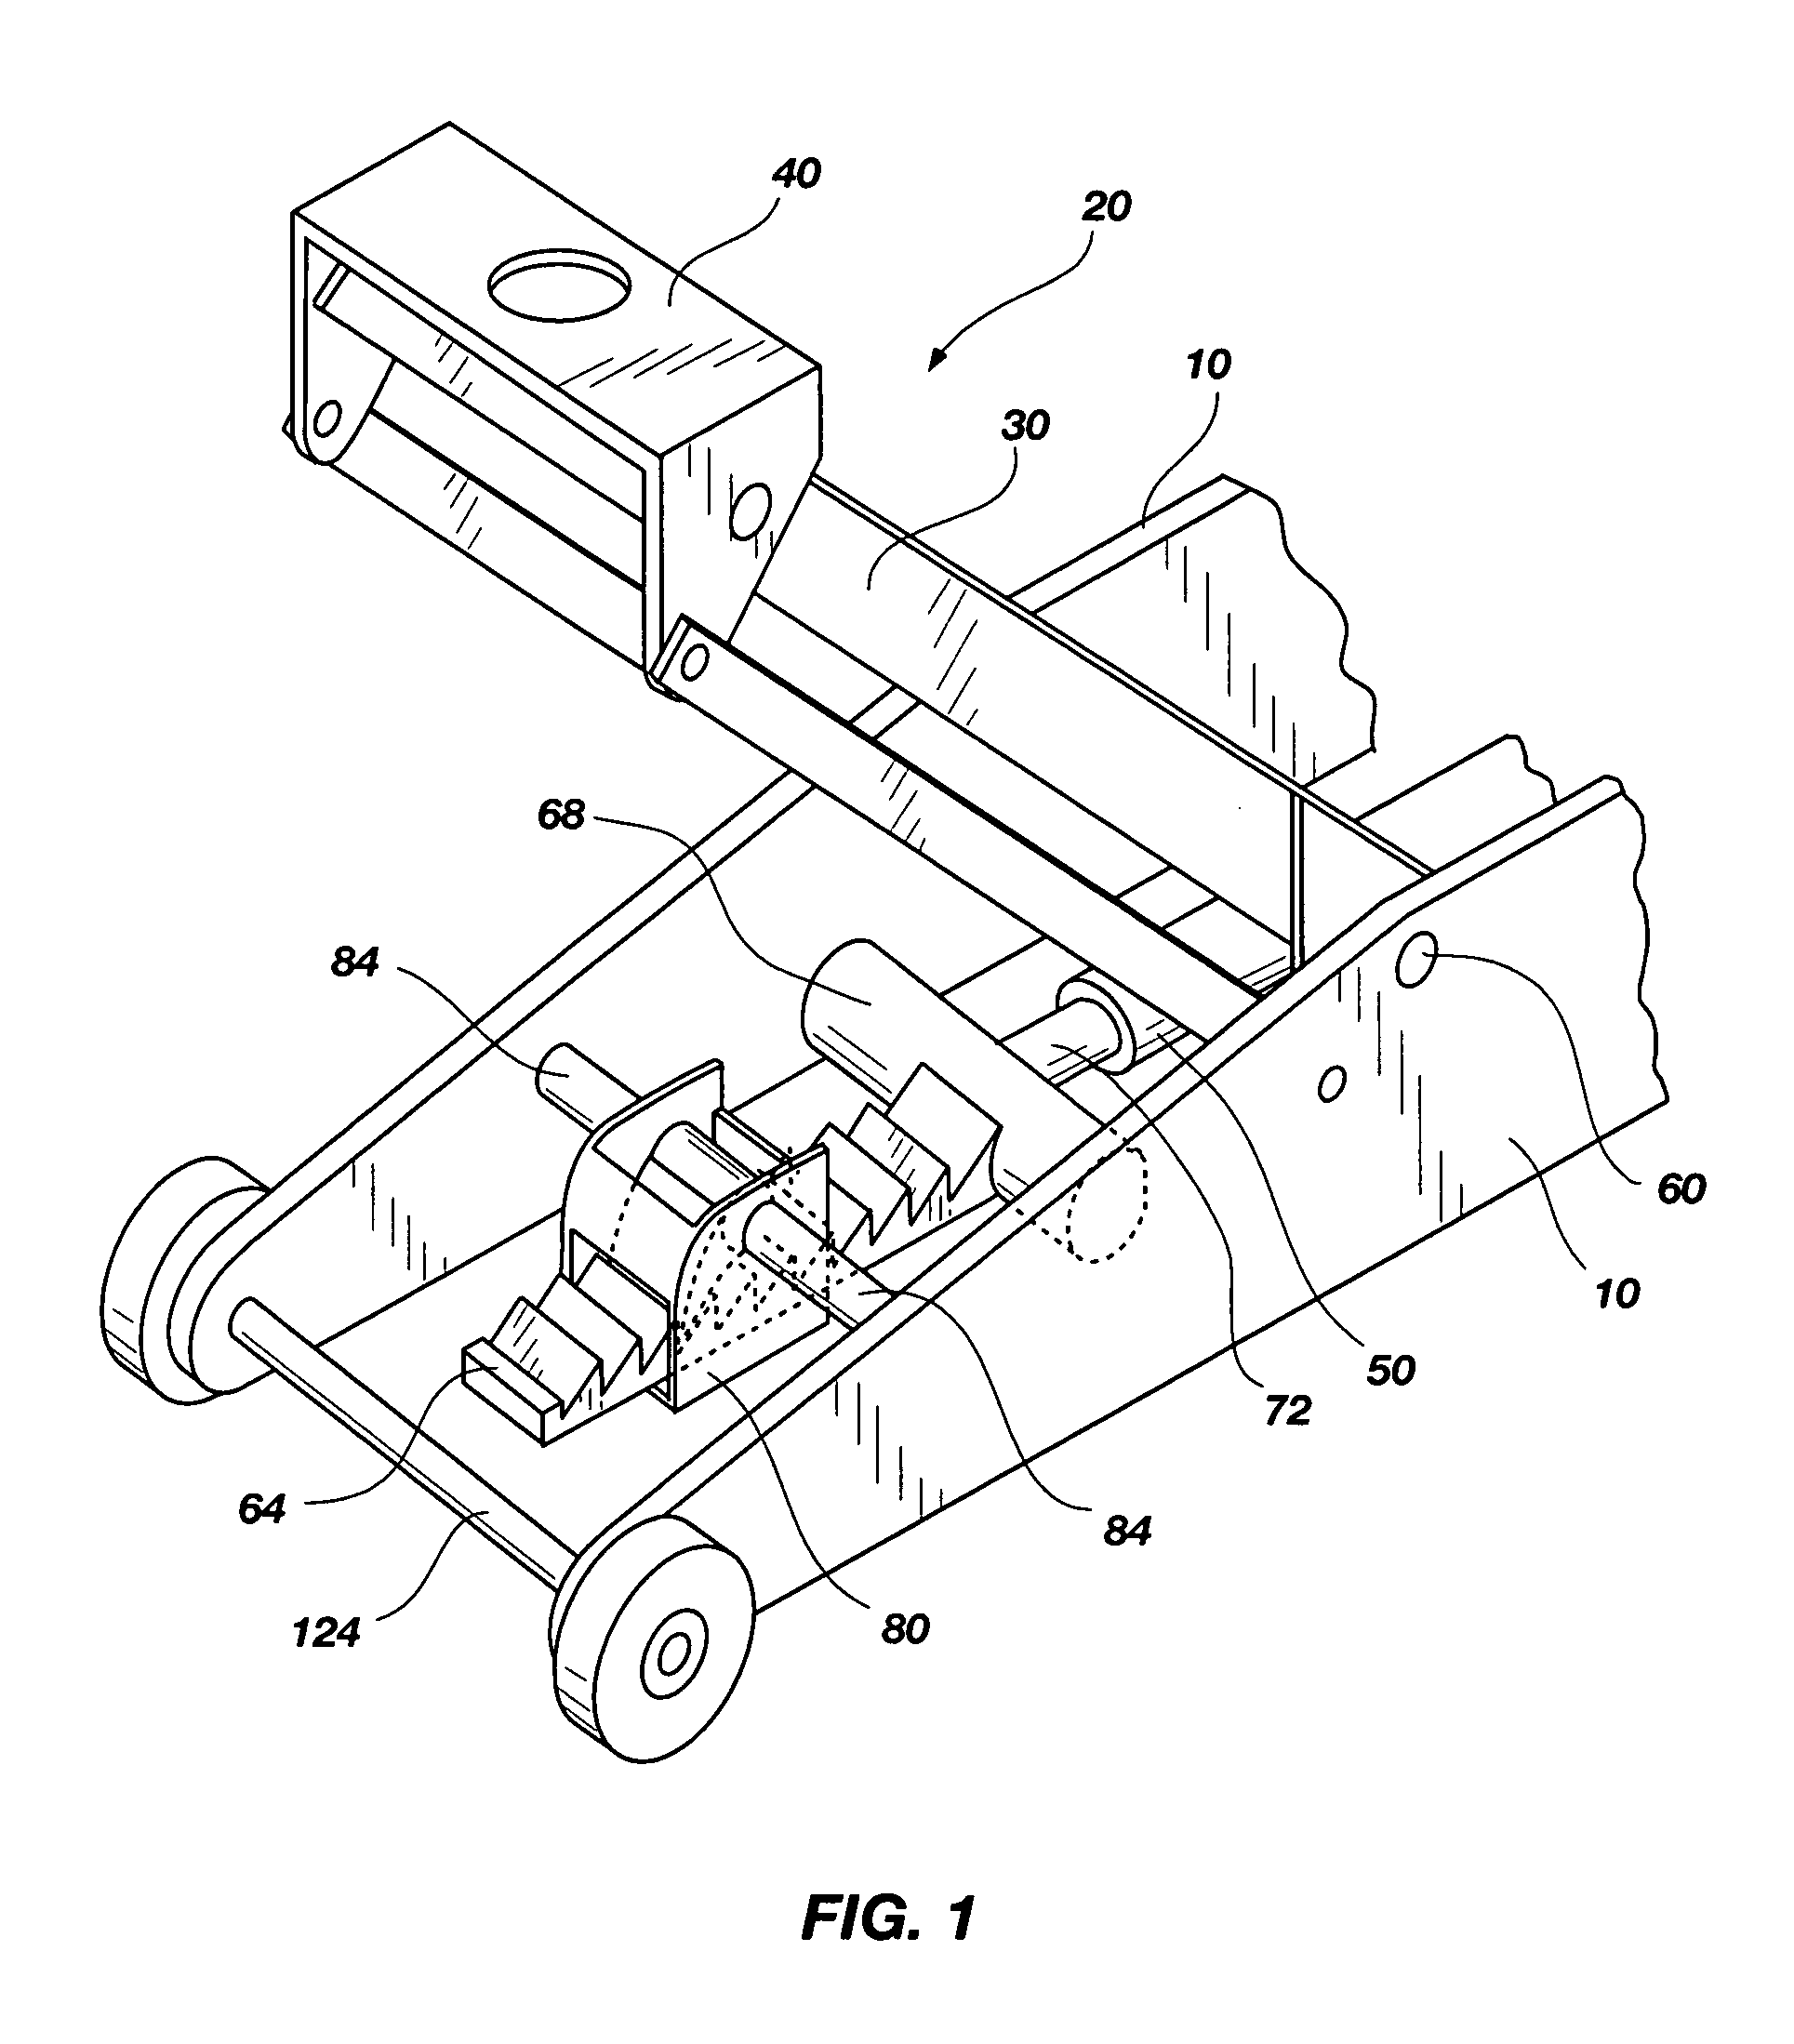 Hydraulic Jack with locking mechanism